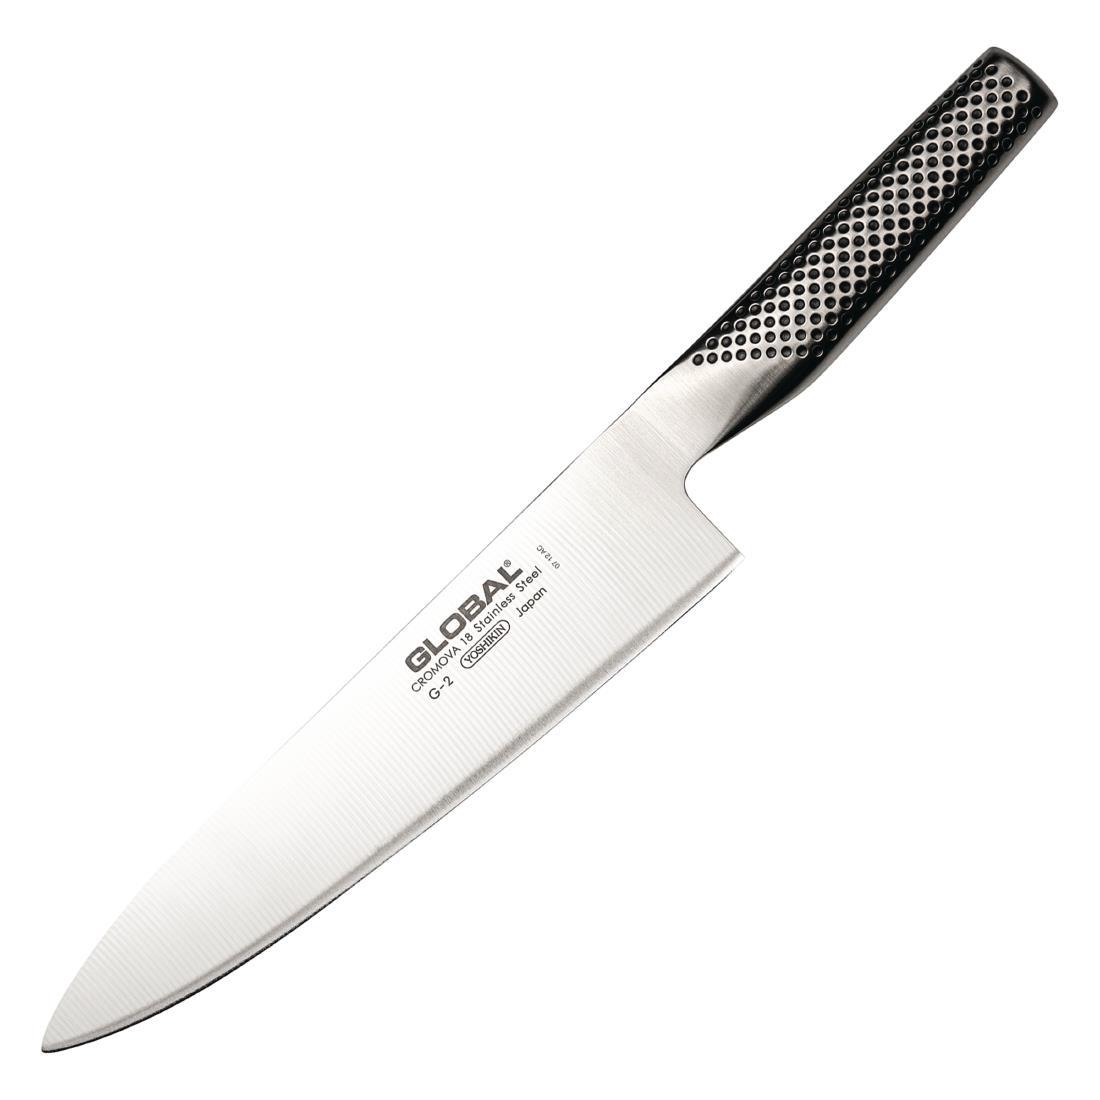 Global Classic Chefs Knife 20cm With Knife Sharpener - DG016  - 2